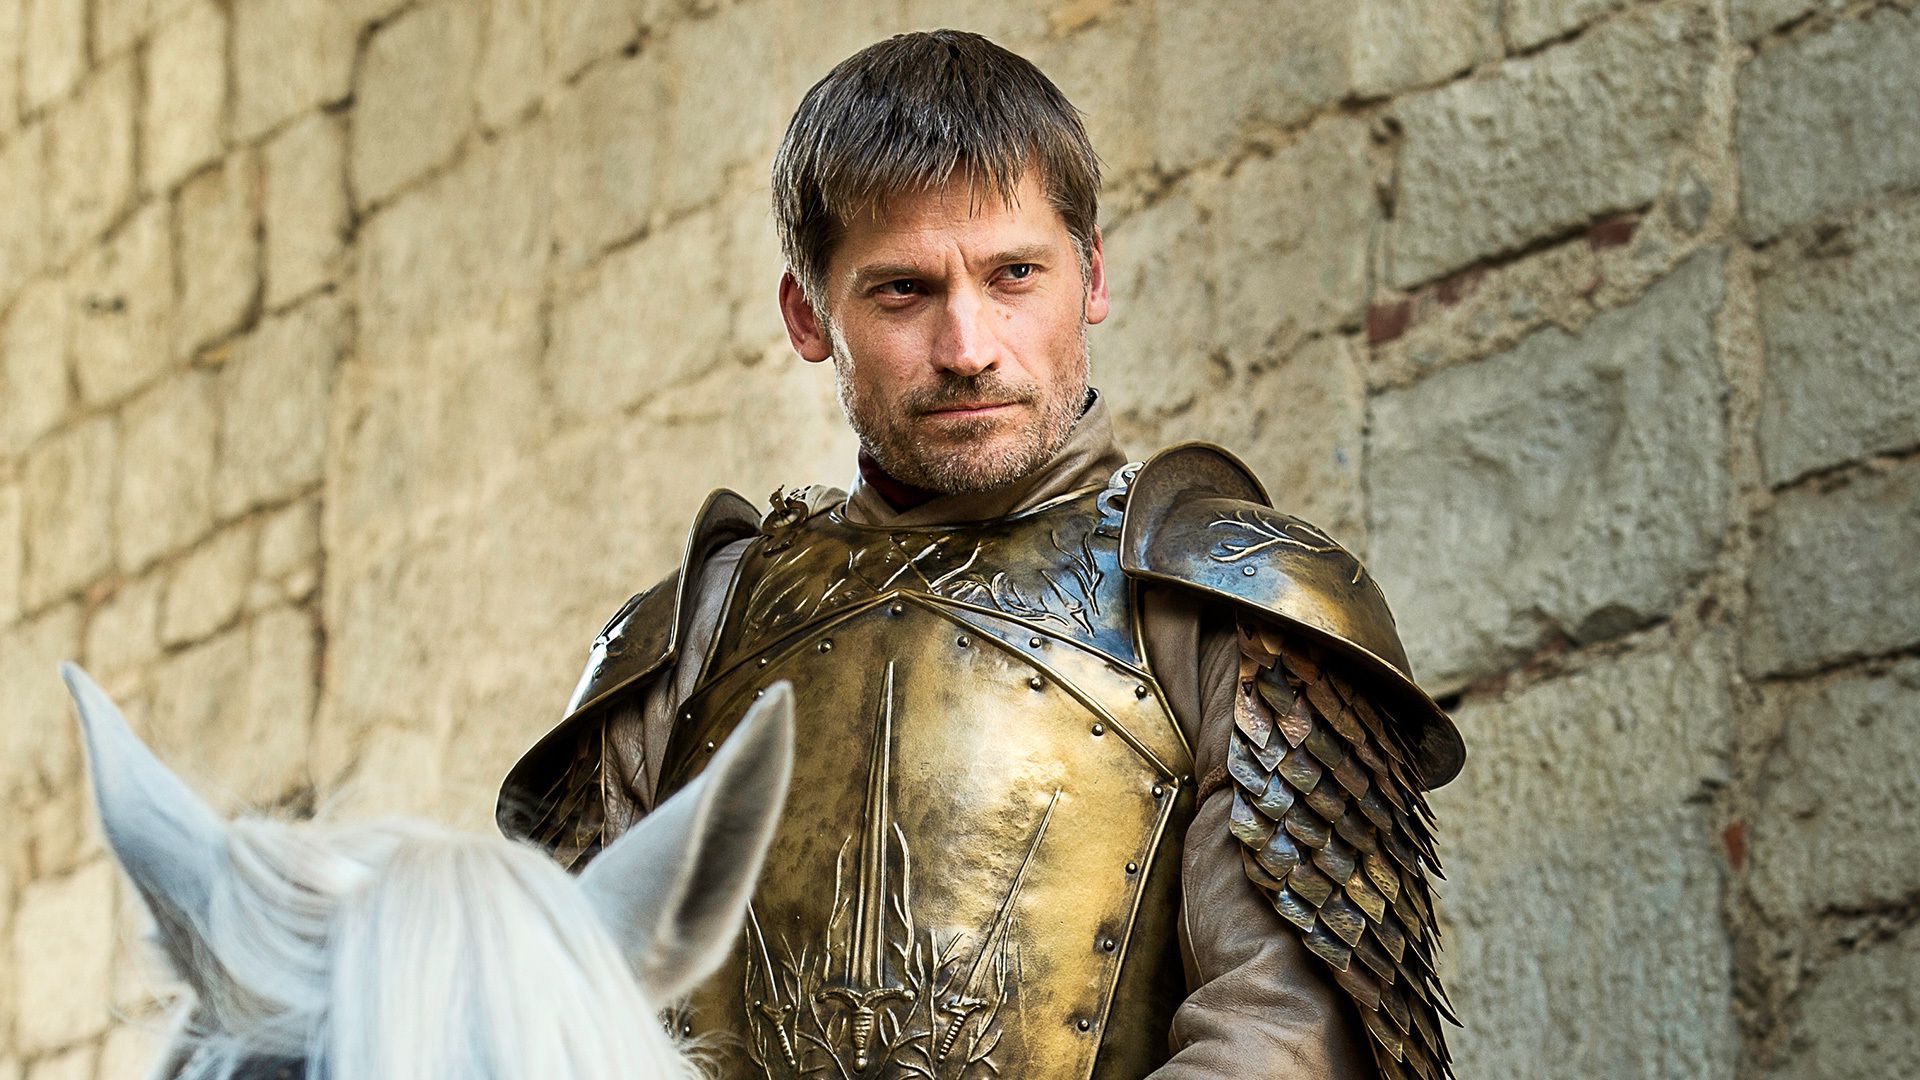 Qué-personaje-de-Game-of-Thrones-eres-Jaime-Lannister